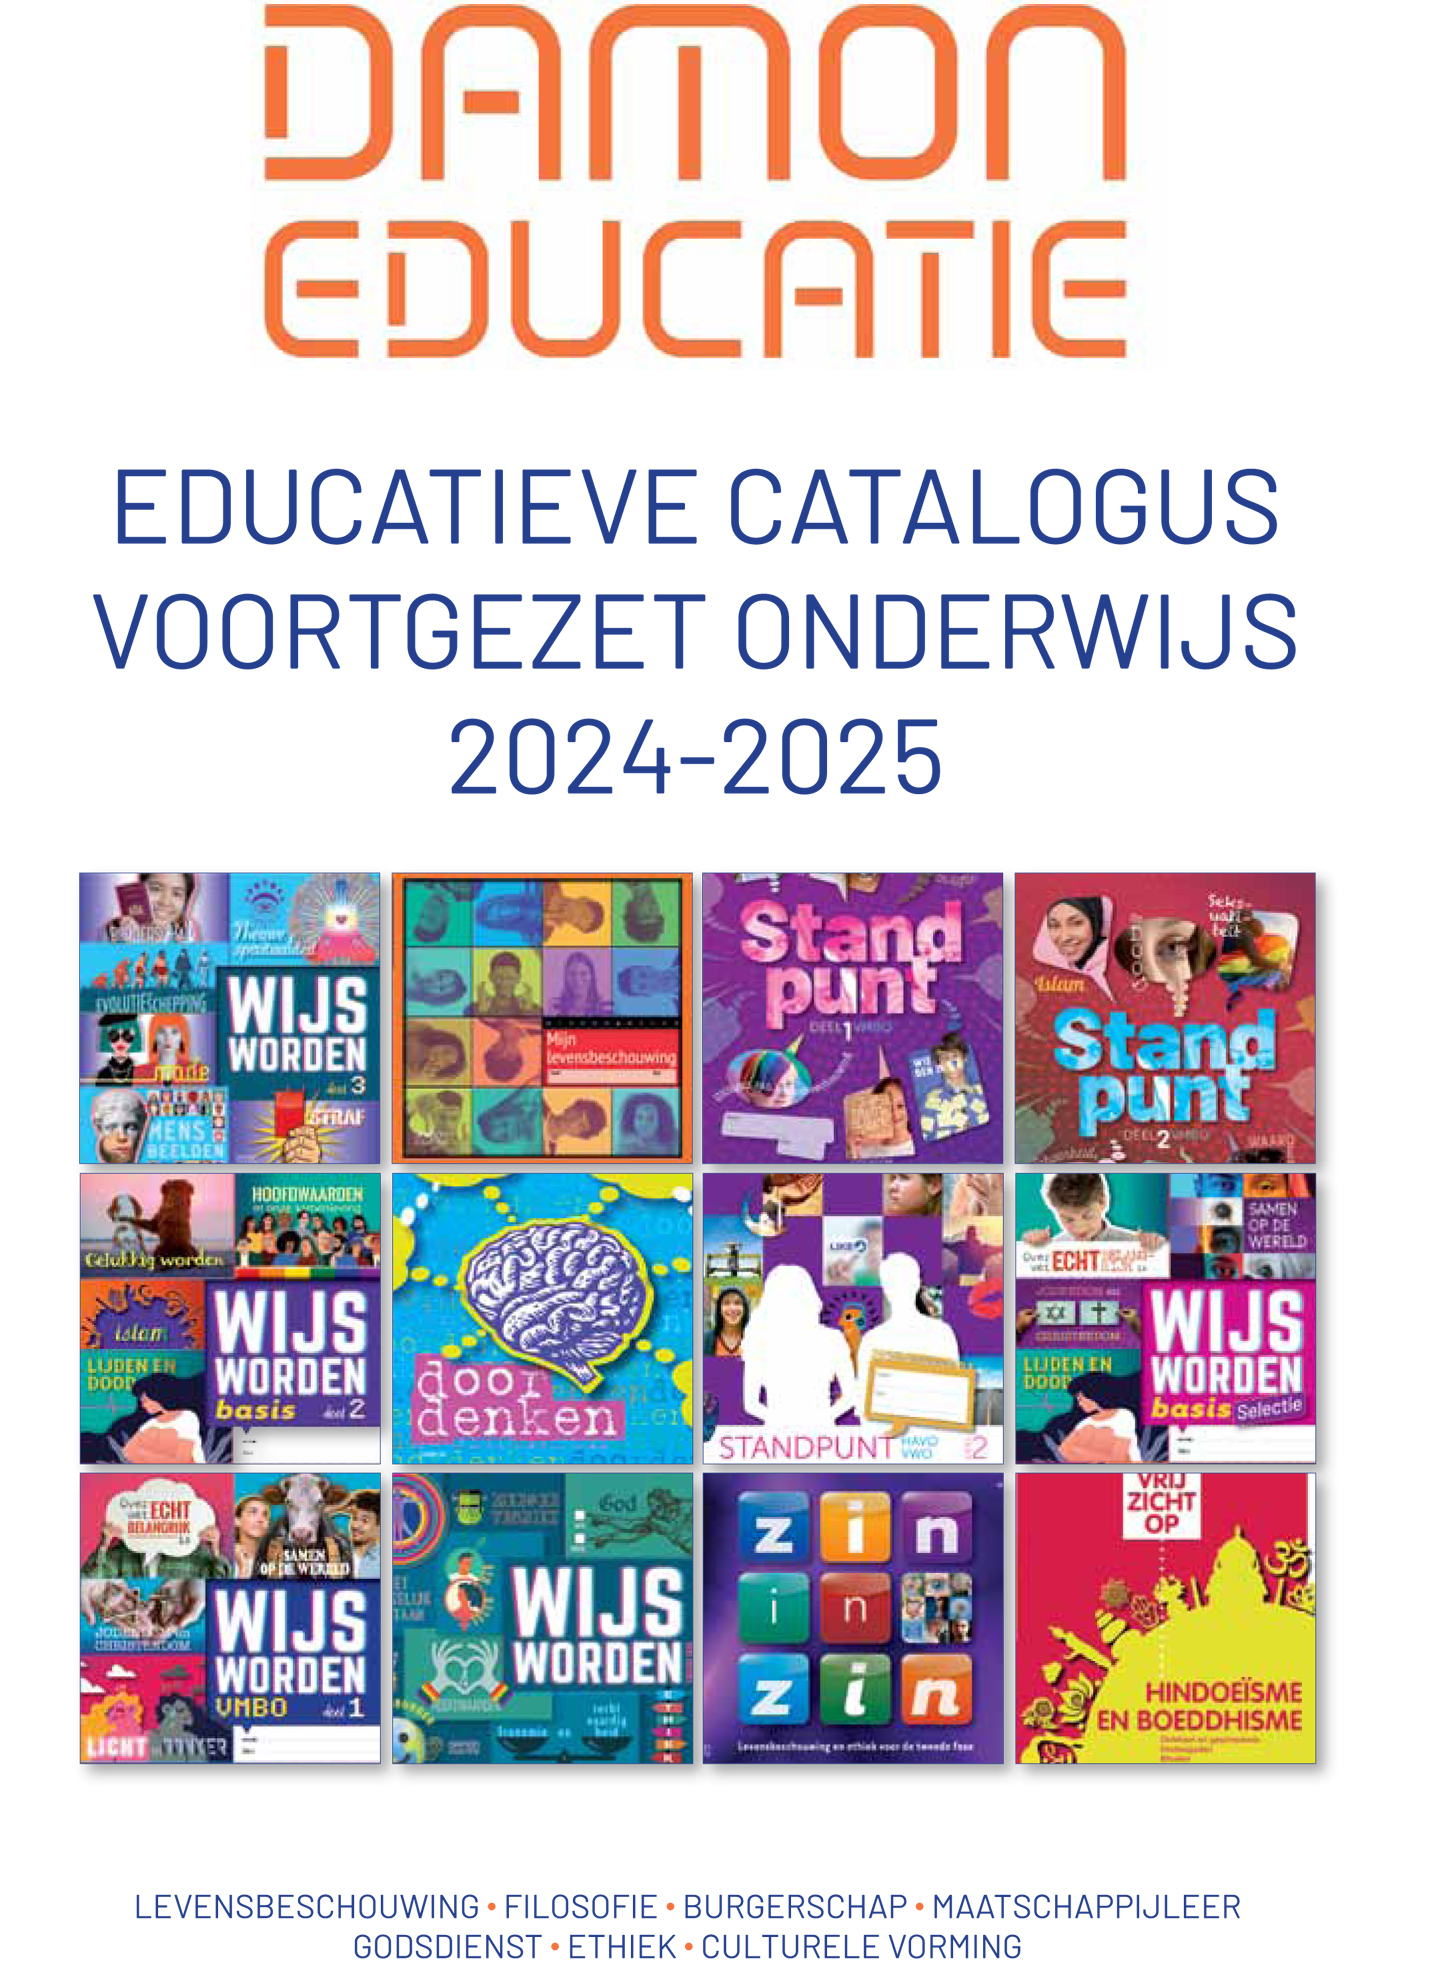 Damon Educatie educatieve catalogus 2024-2025